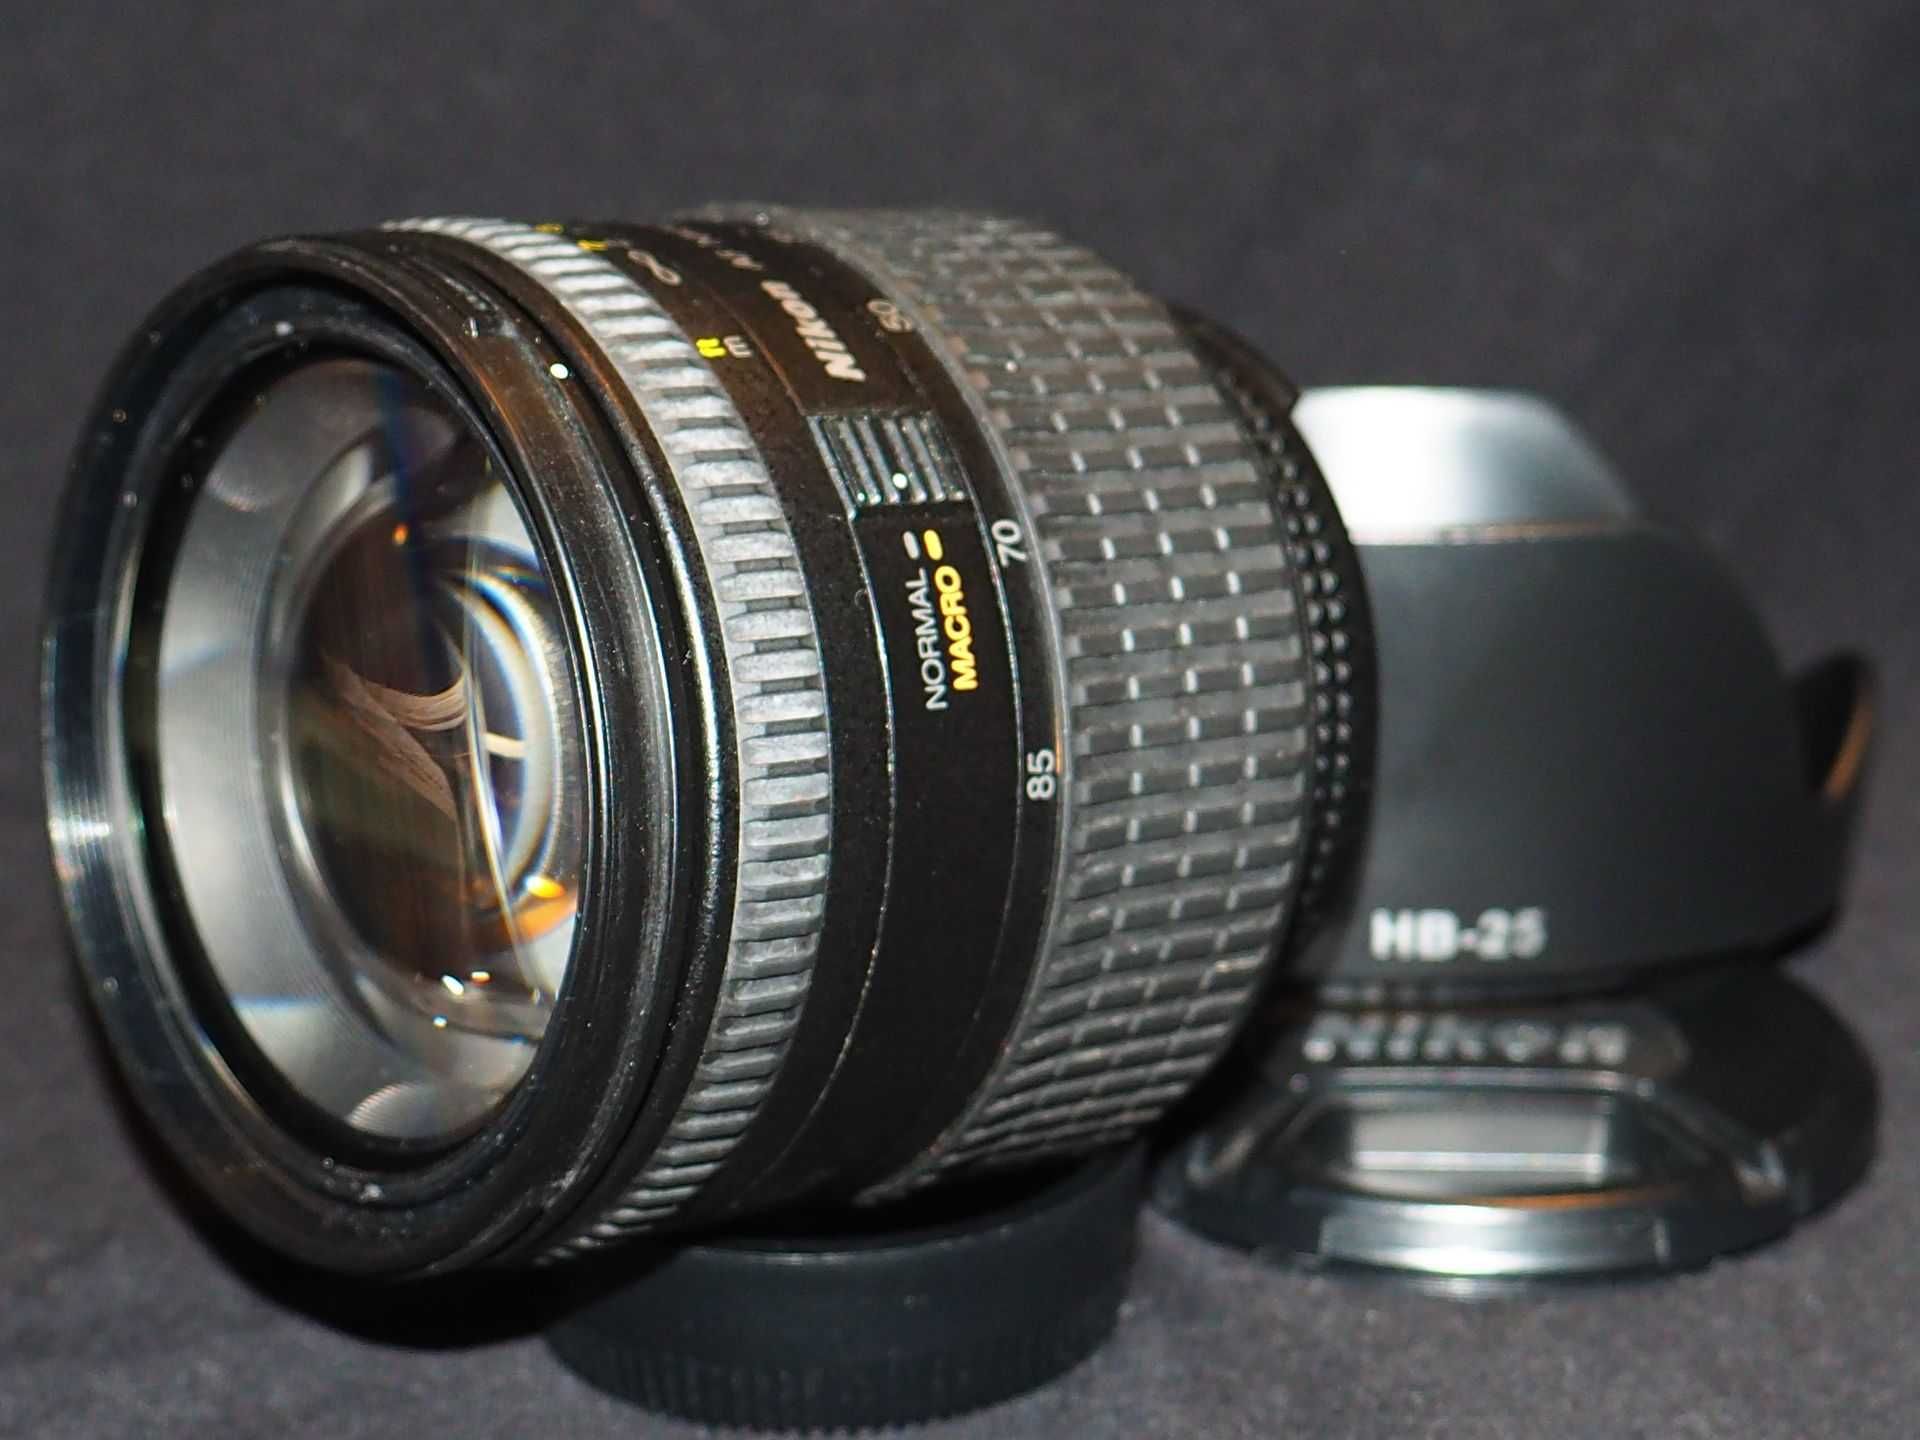 Obiektyw Nikon AF Nikkor 24-85mm f2.8-4 D IF Aspherical Macro(1:2).